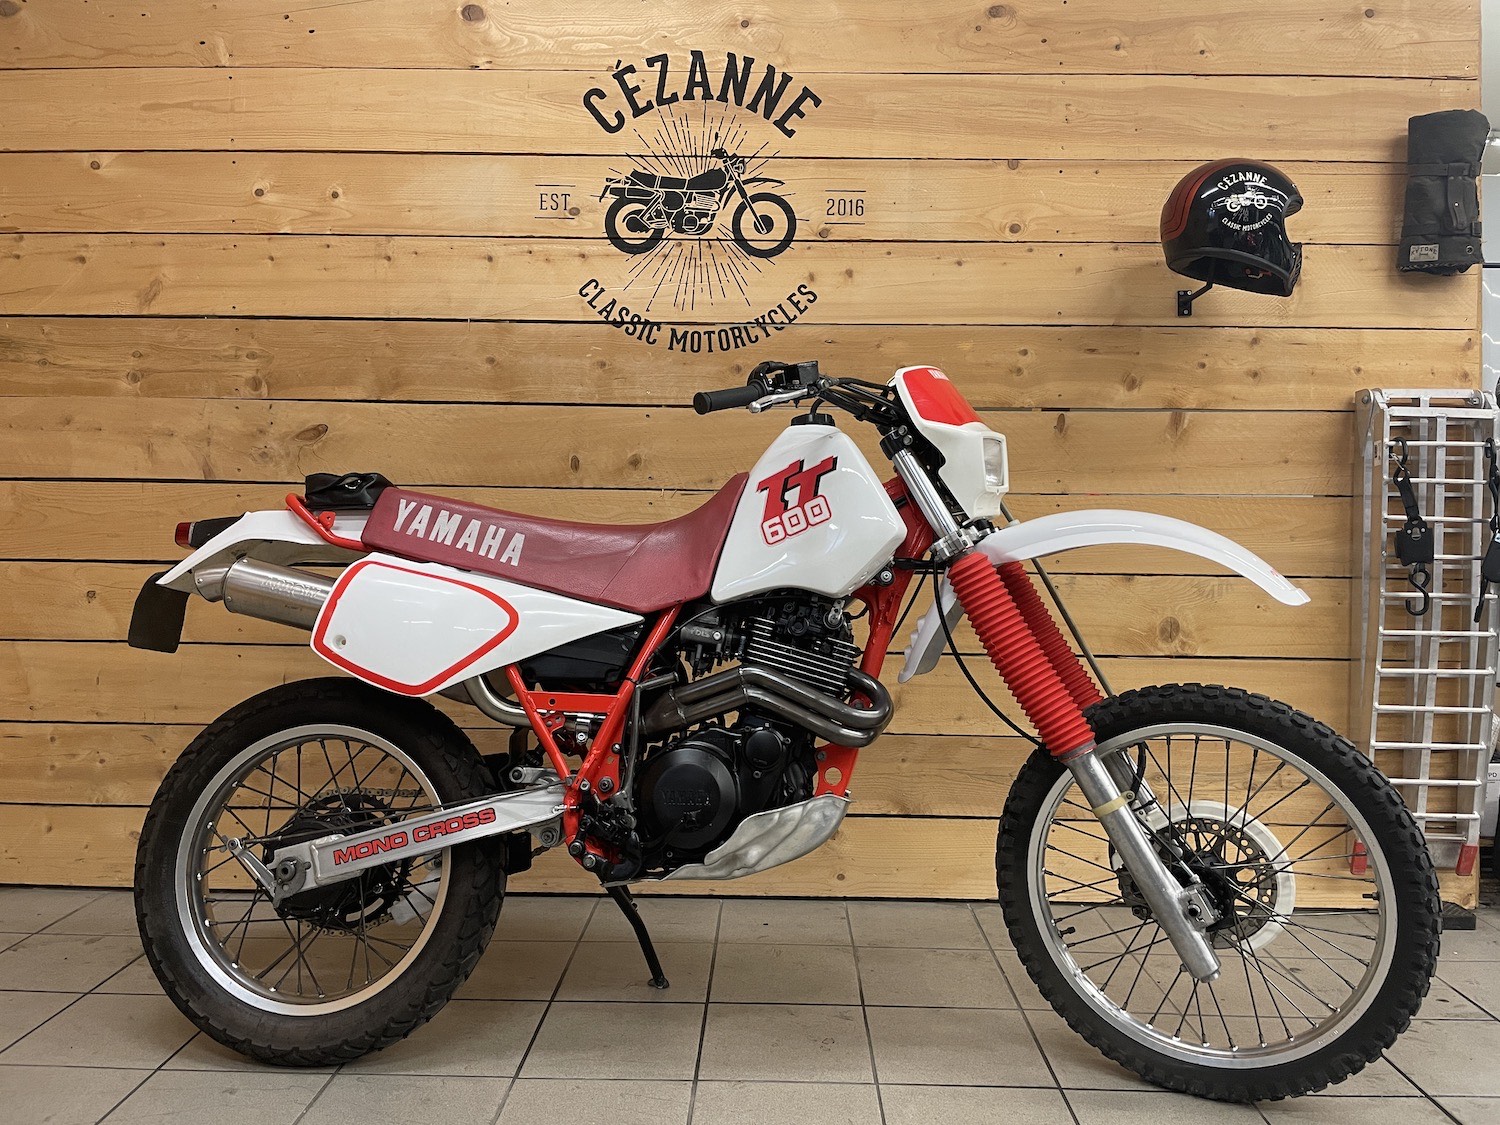 Yamaha_TT600_88_cezanne_classic_motorcycle-101.jpg